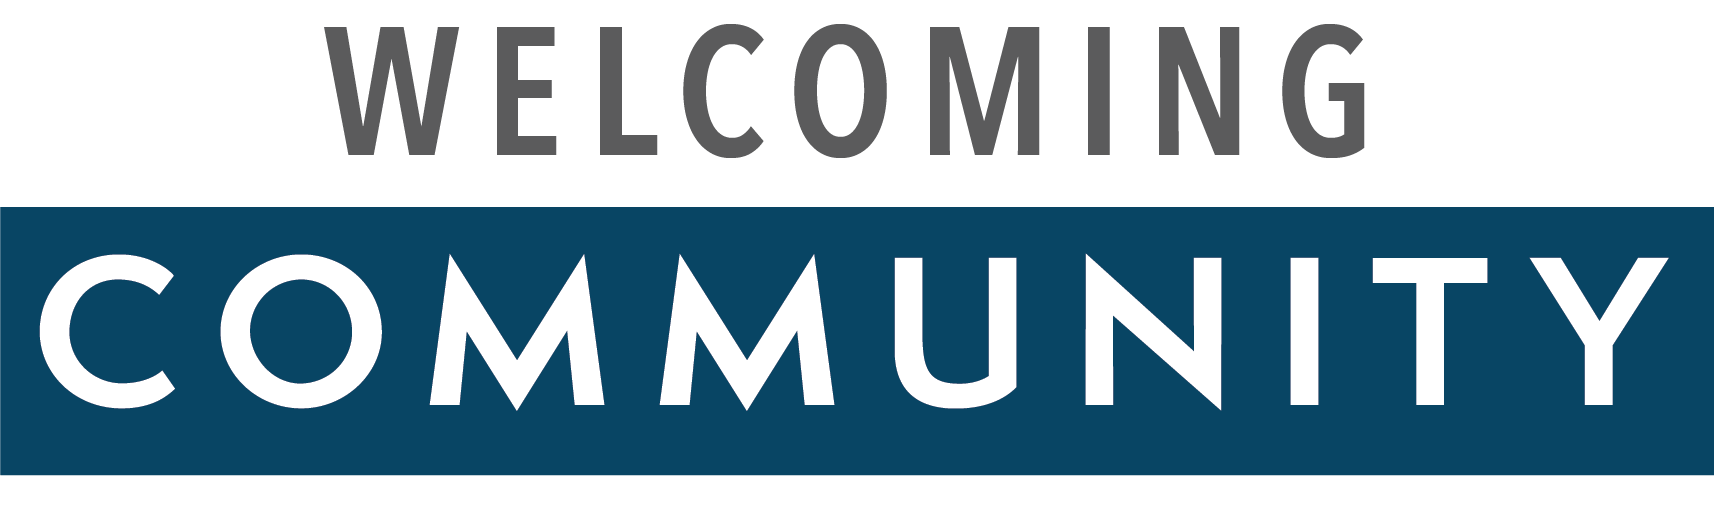 Welcoming Community Logo